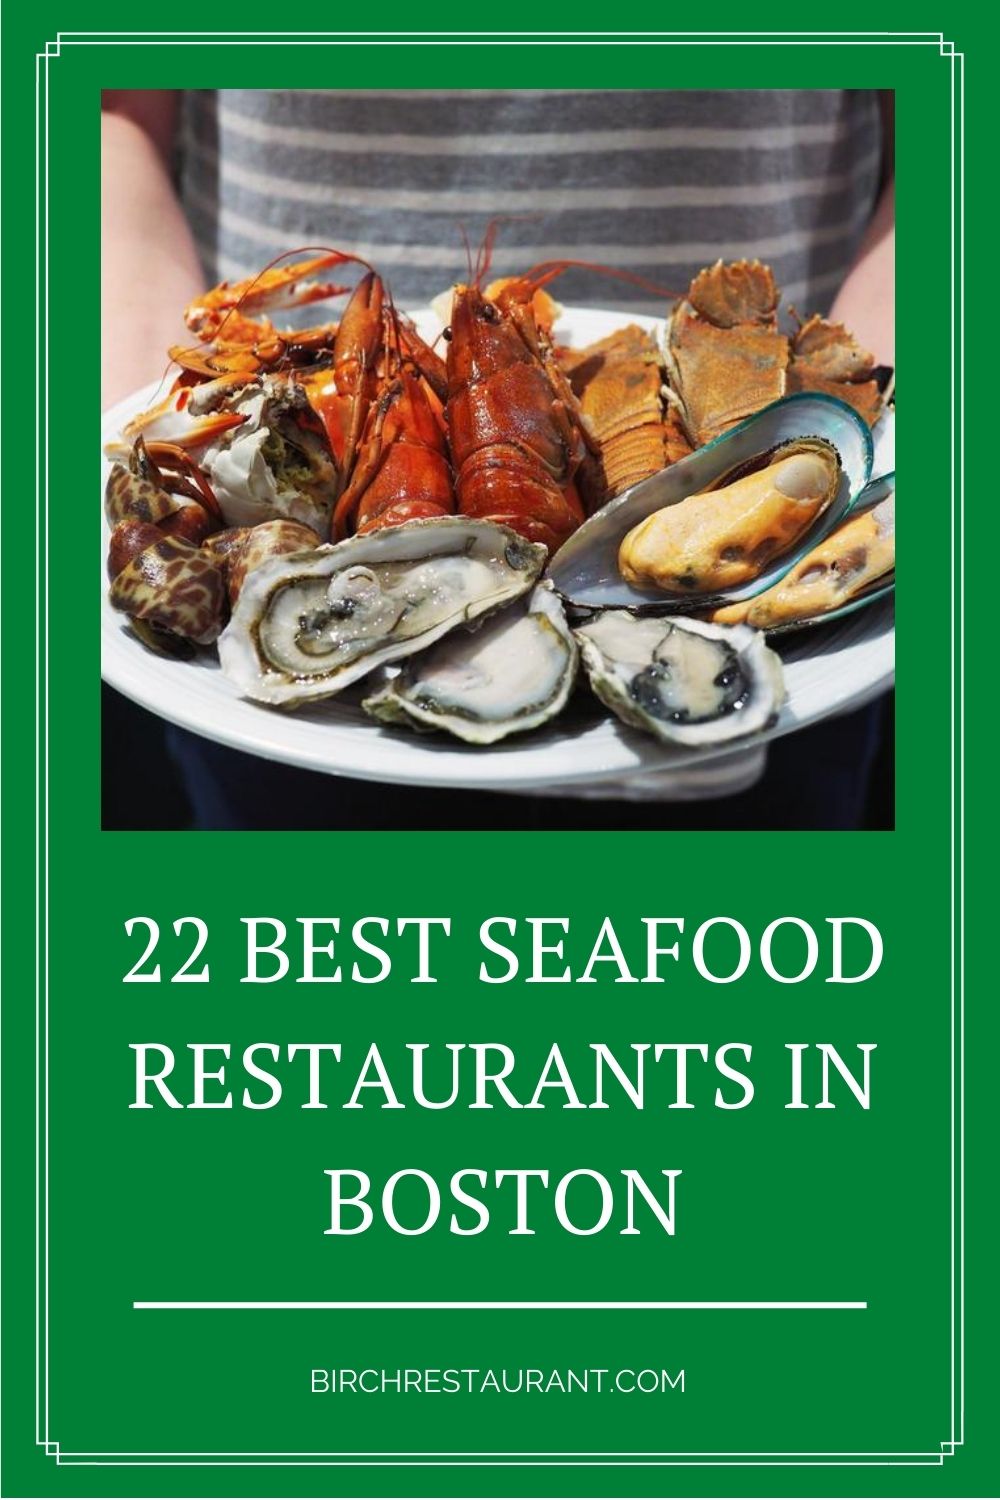 Best Seafood Restaurants in Boston